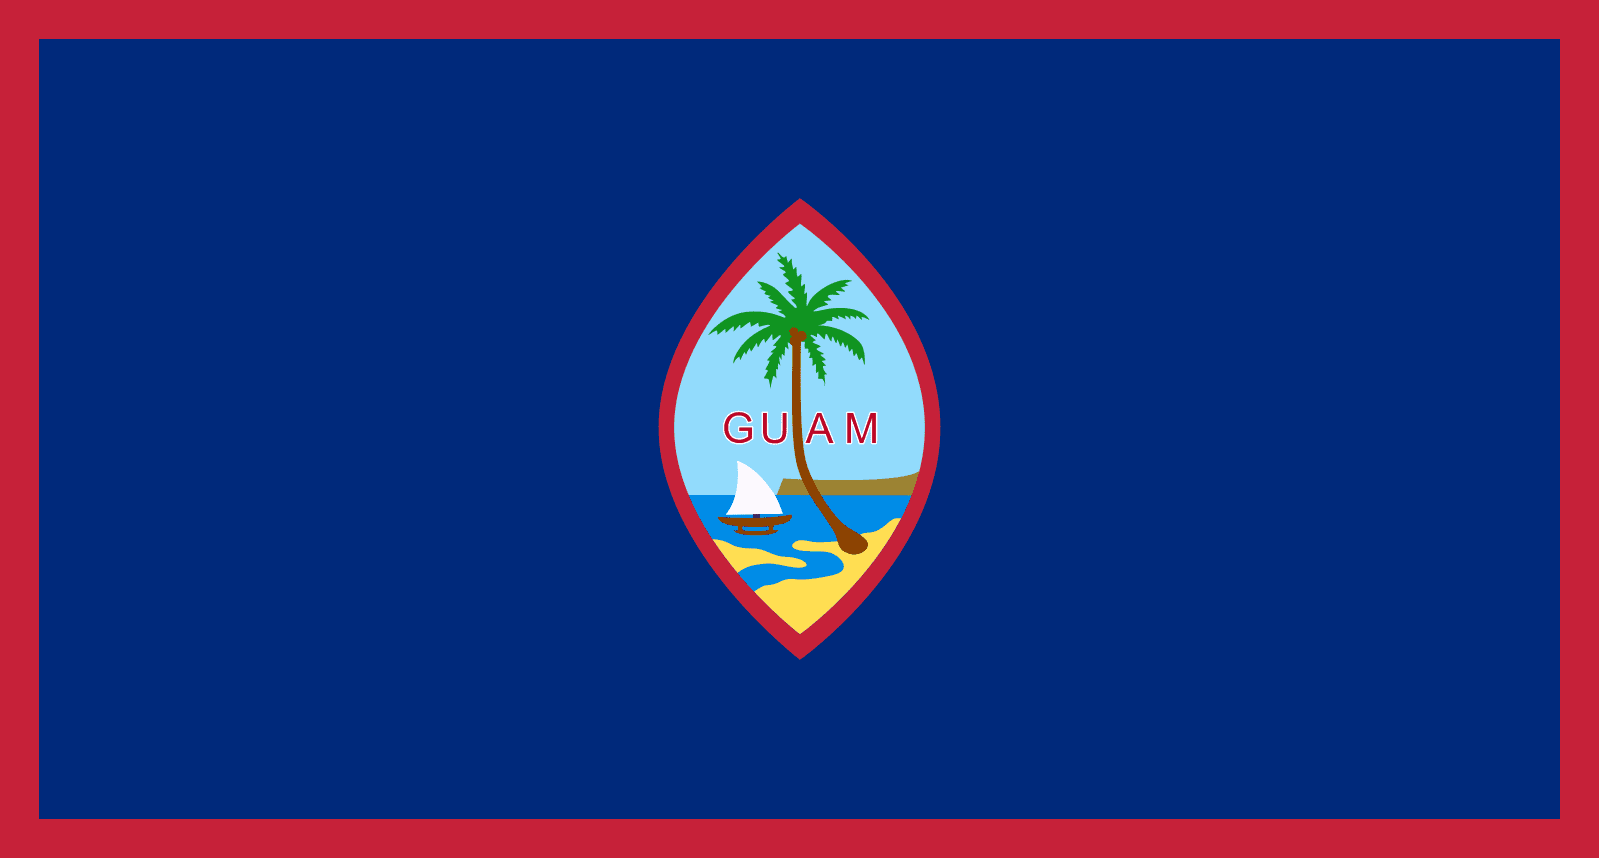 Facts of Guam